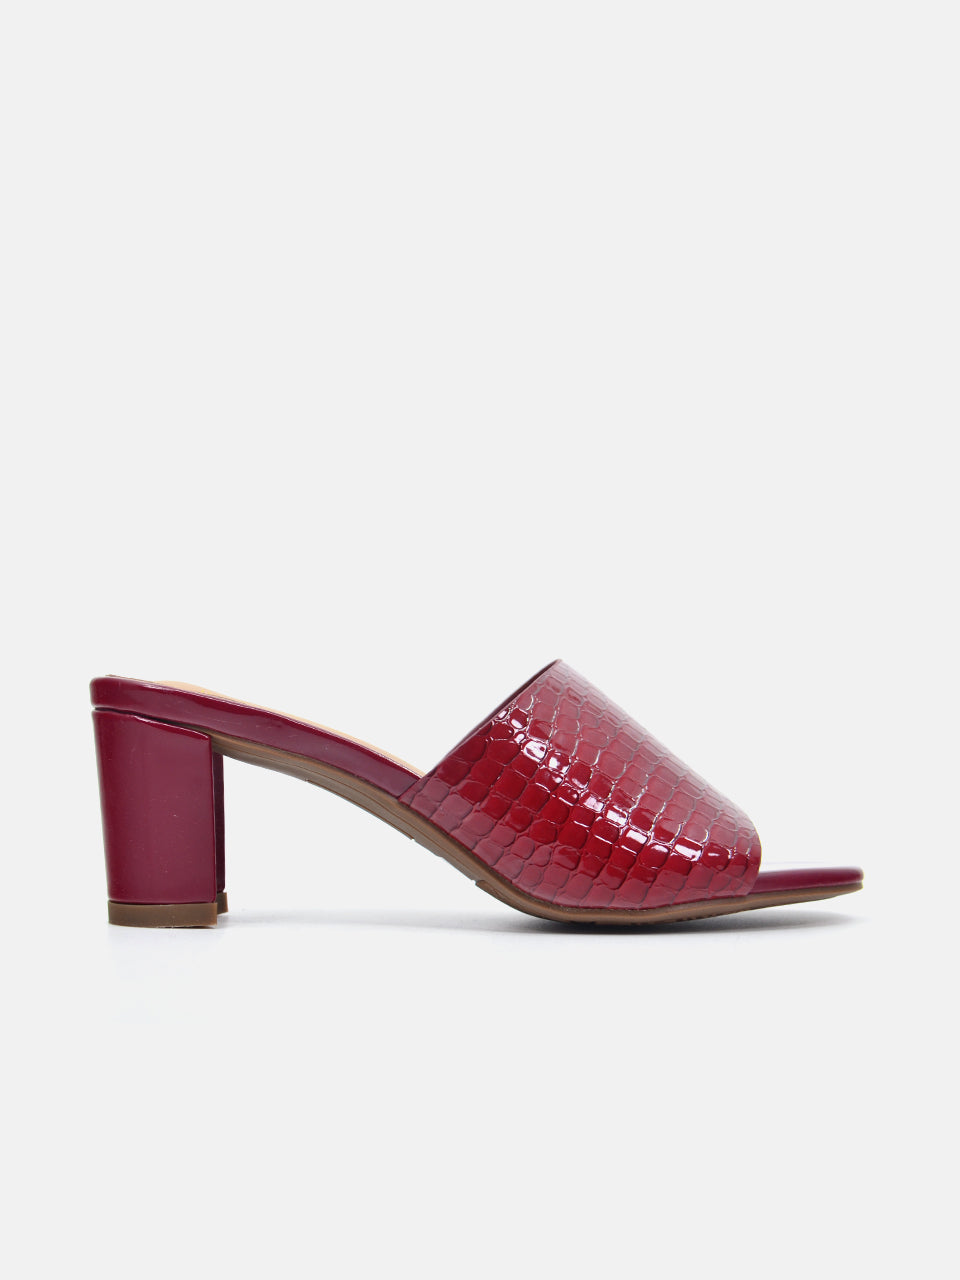 Michelle Morgan 914RJ191 Women's Heeled Sandals #color_Maroon